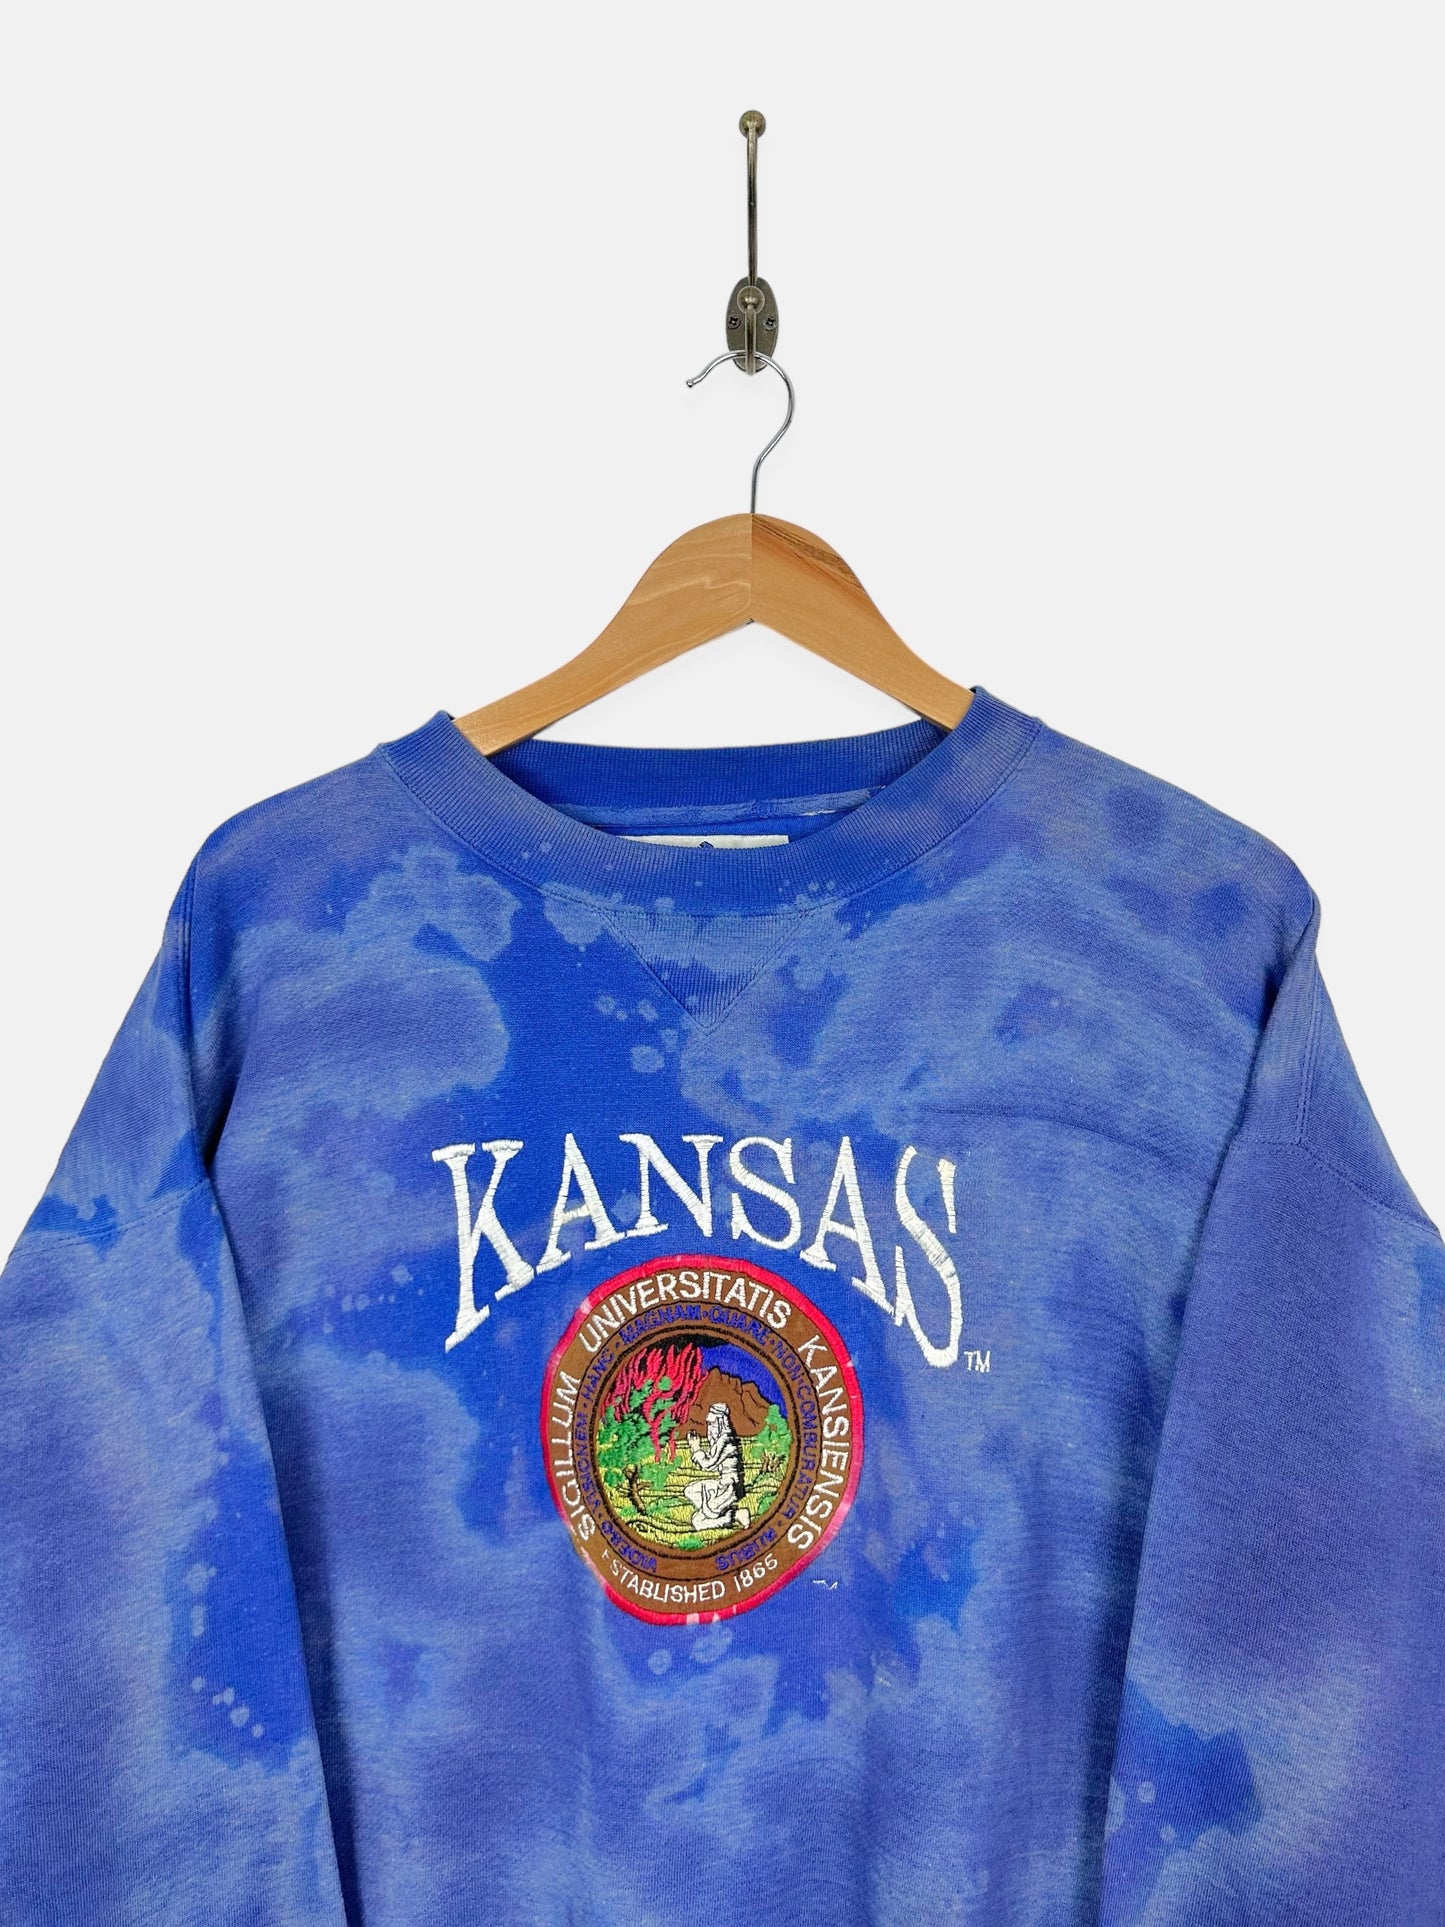 90's Kansas University Embroidered Vintage Sweatshirt Size XL